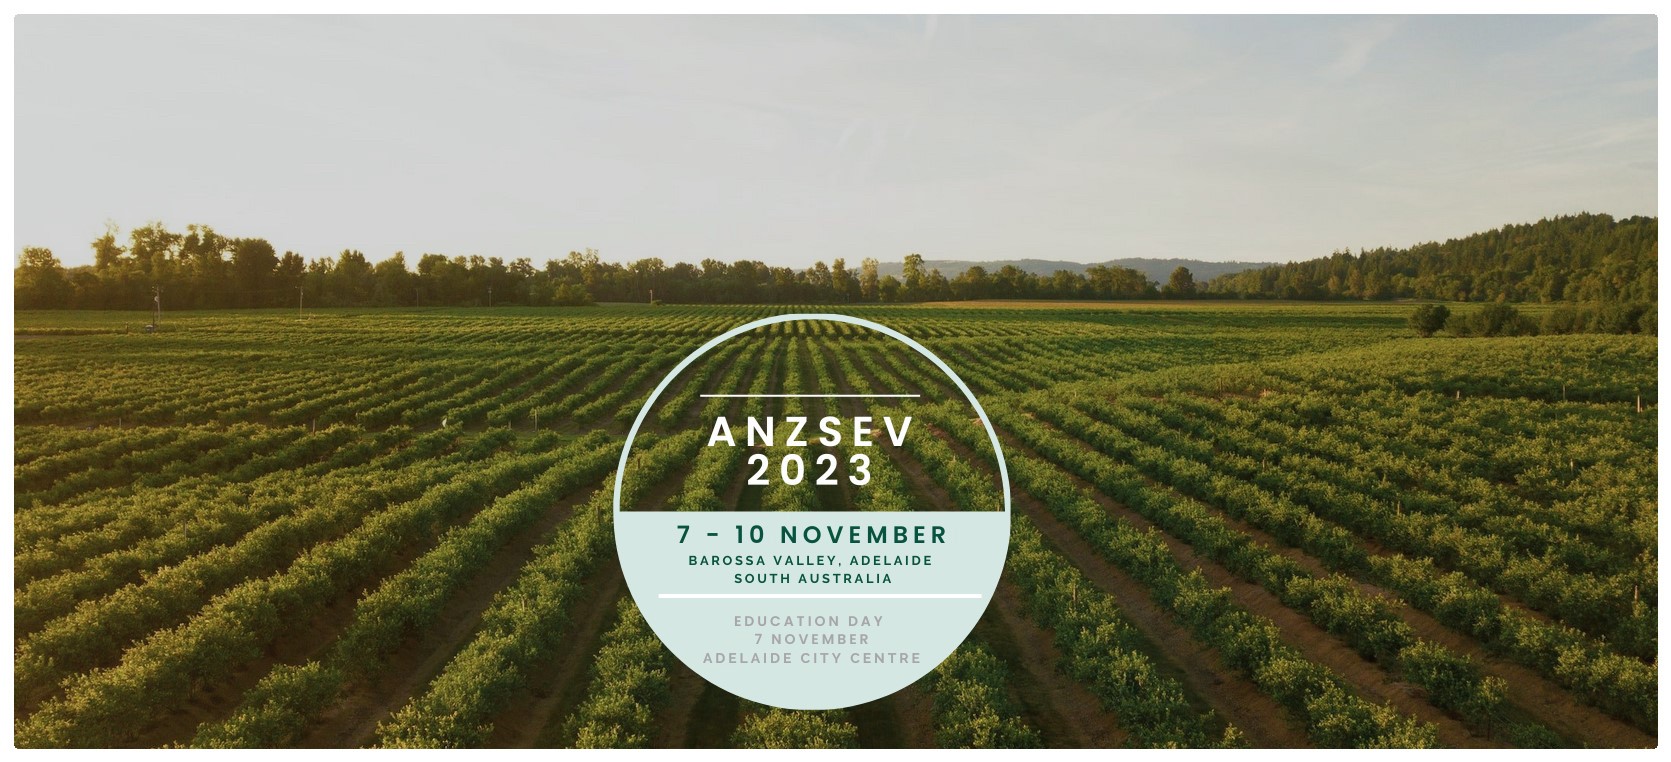 ANZSEV 2023